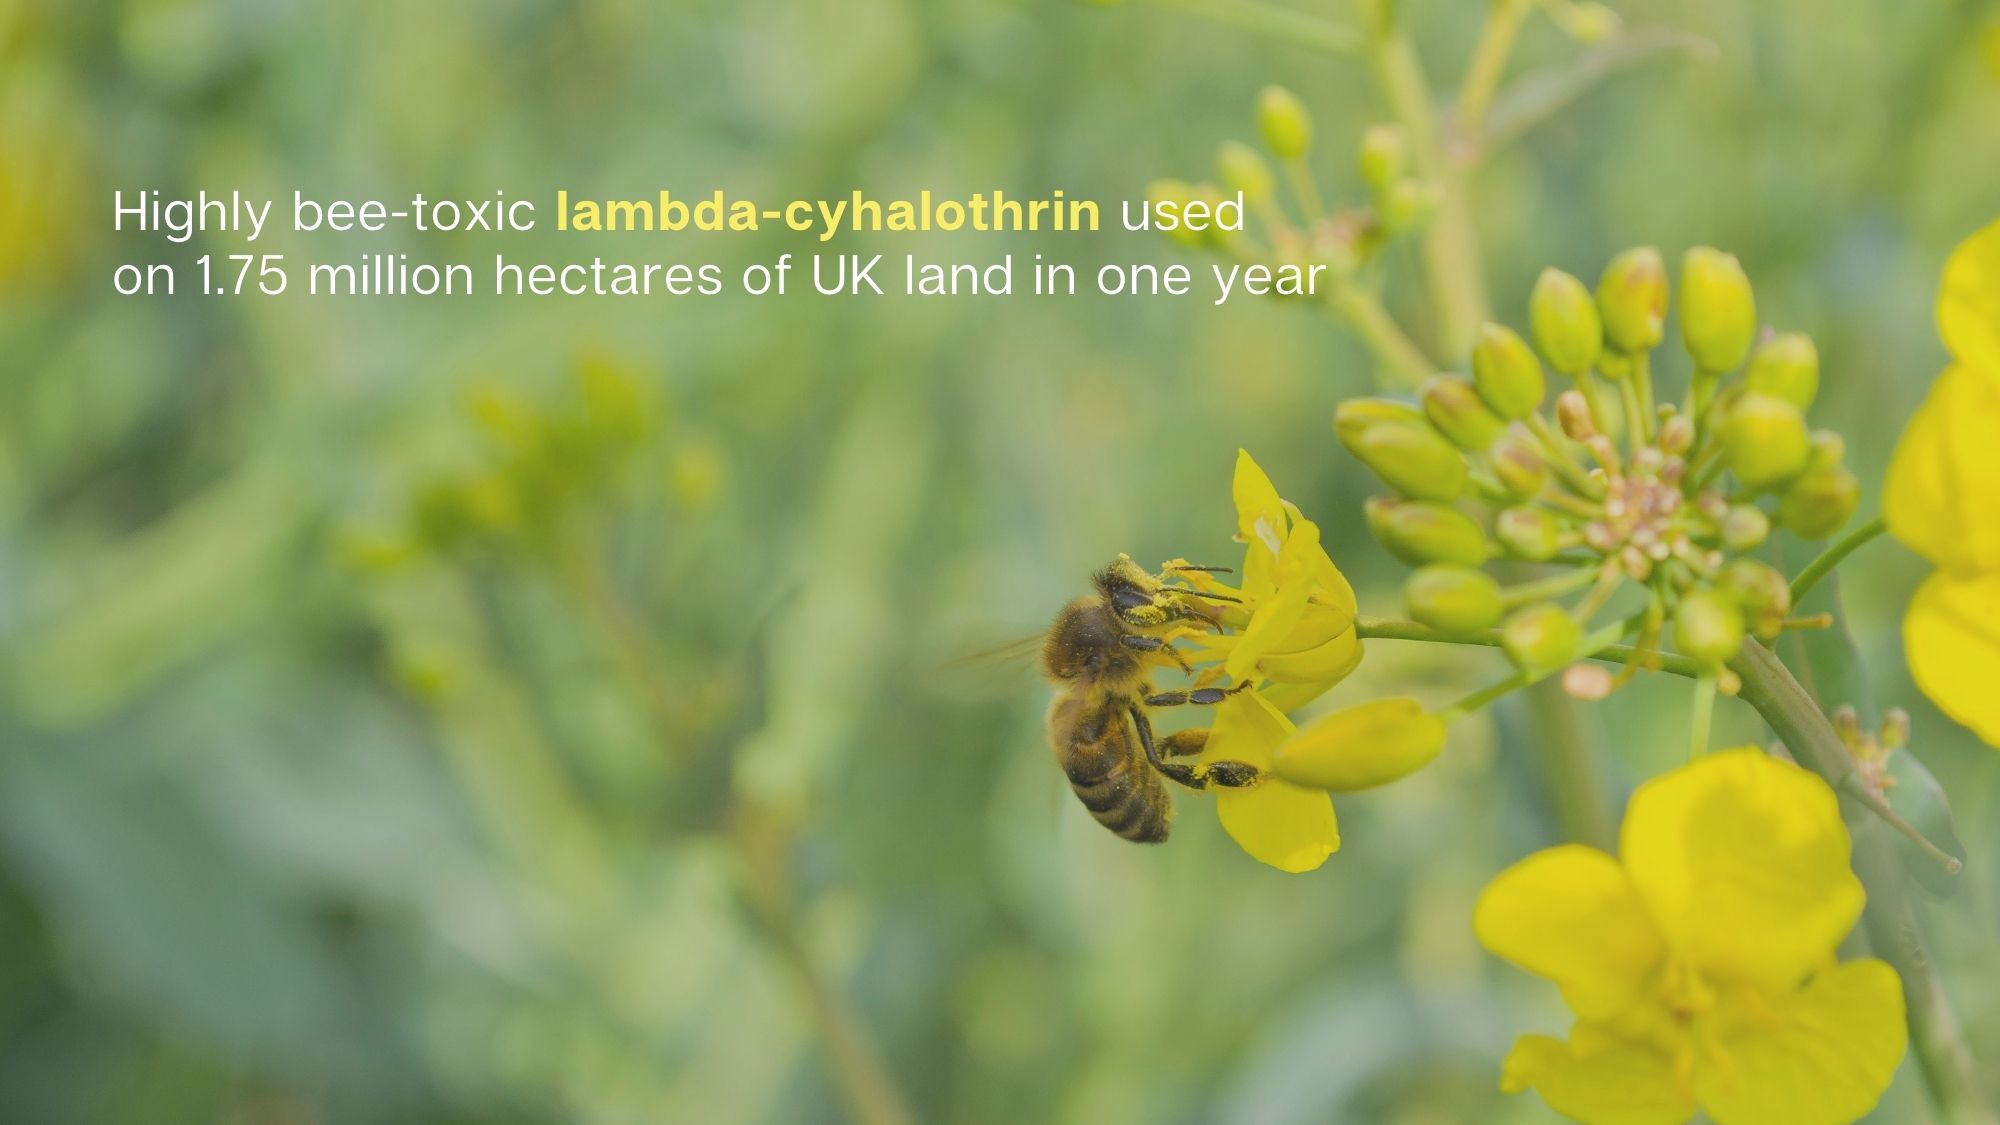 Highly bee-toxic lambda-cyhalothrin used on 1.75 million hectares of UK land in one year